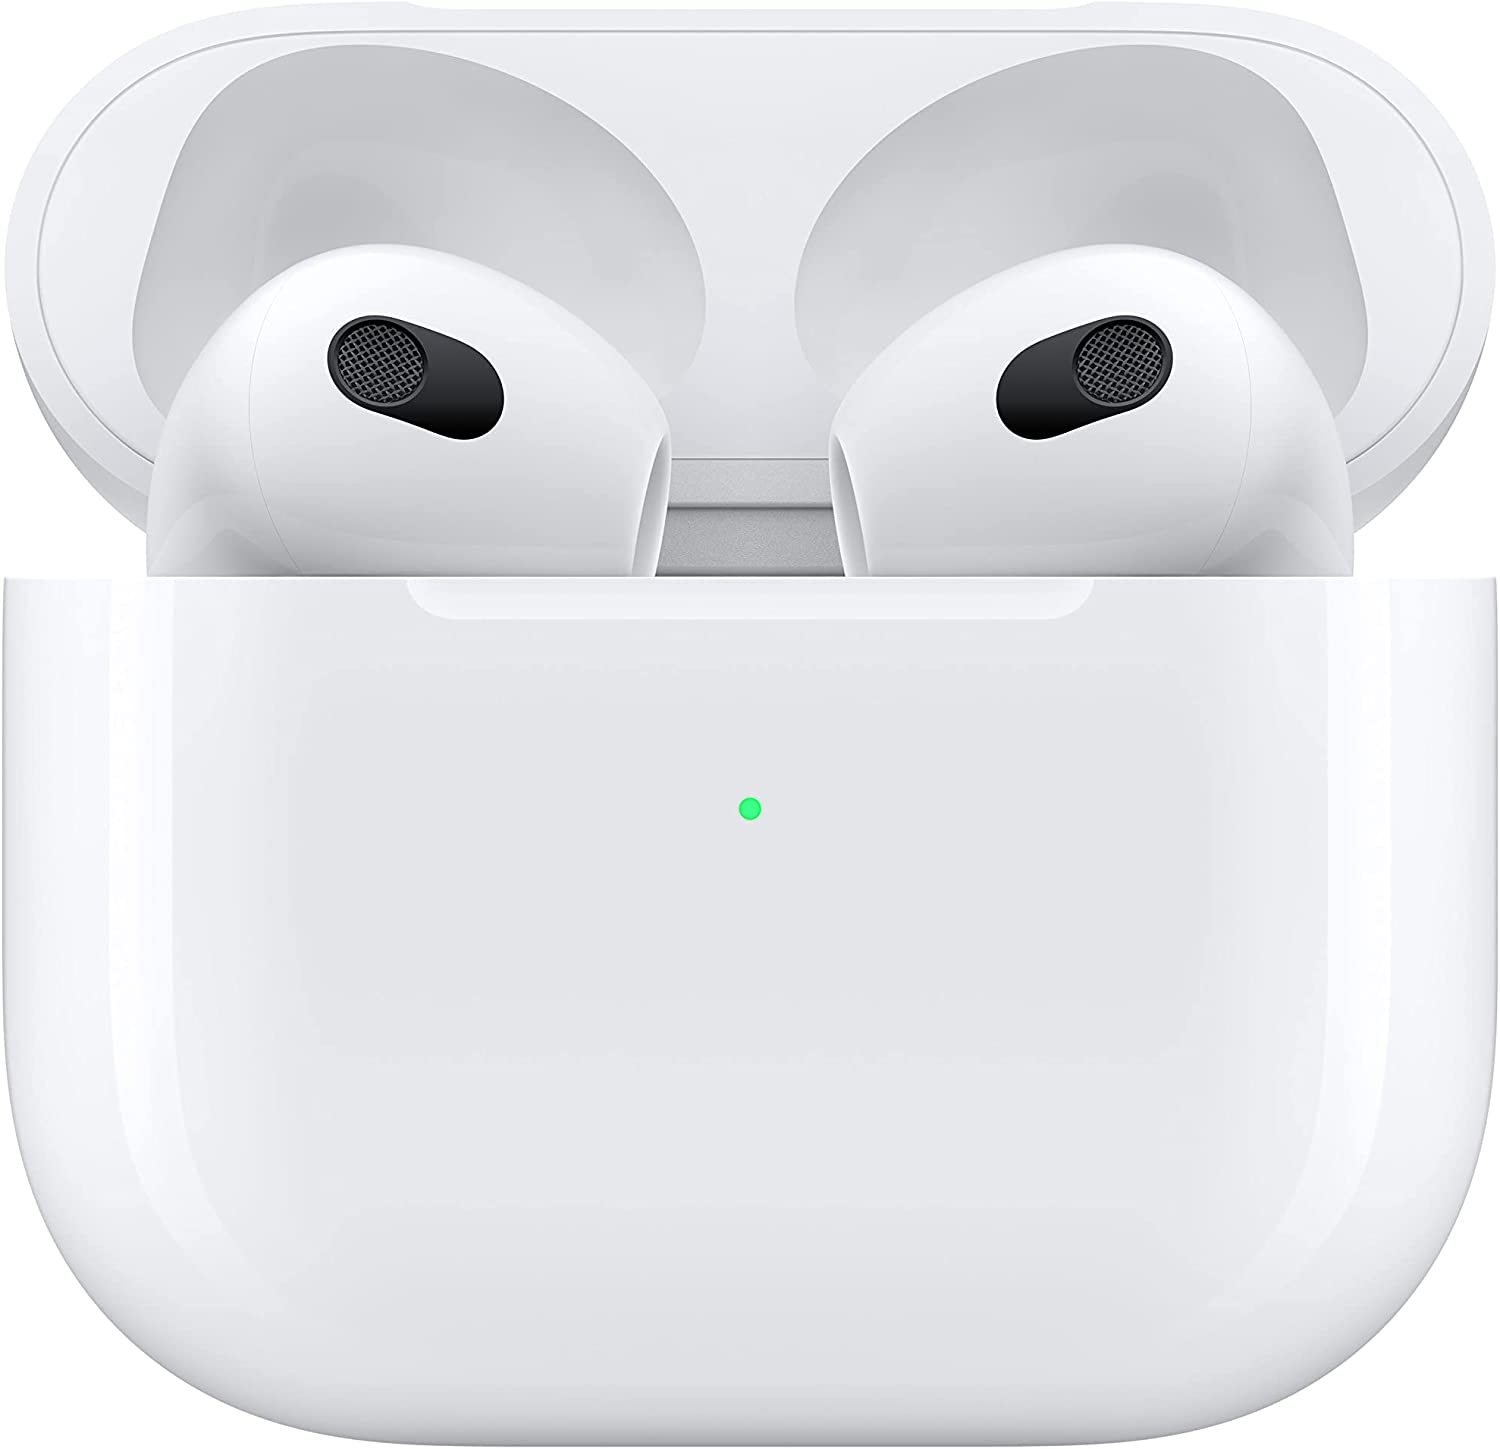 Apple AirPods 3rd Gen In-Ear Wireless Earbuds w/Lightning Charging Case - White (Certified Refurbished)